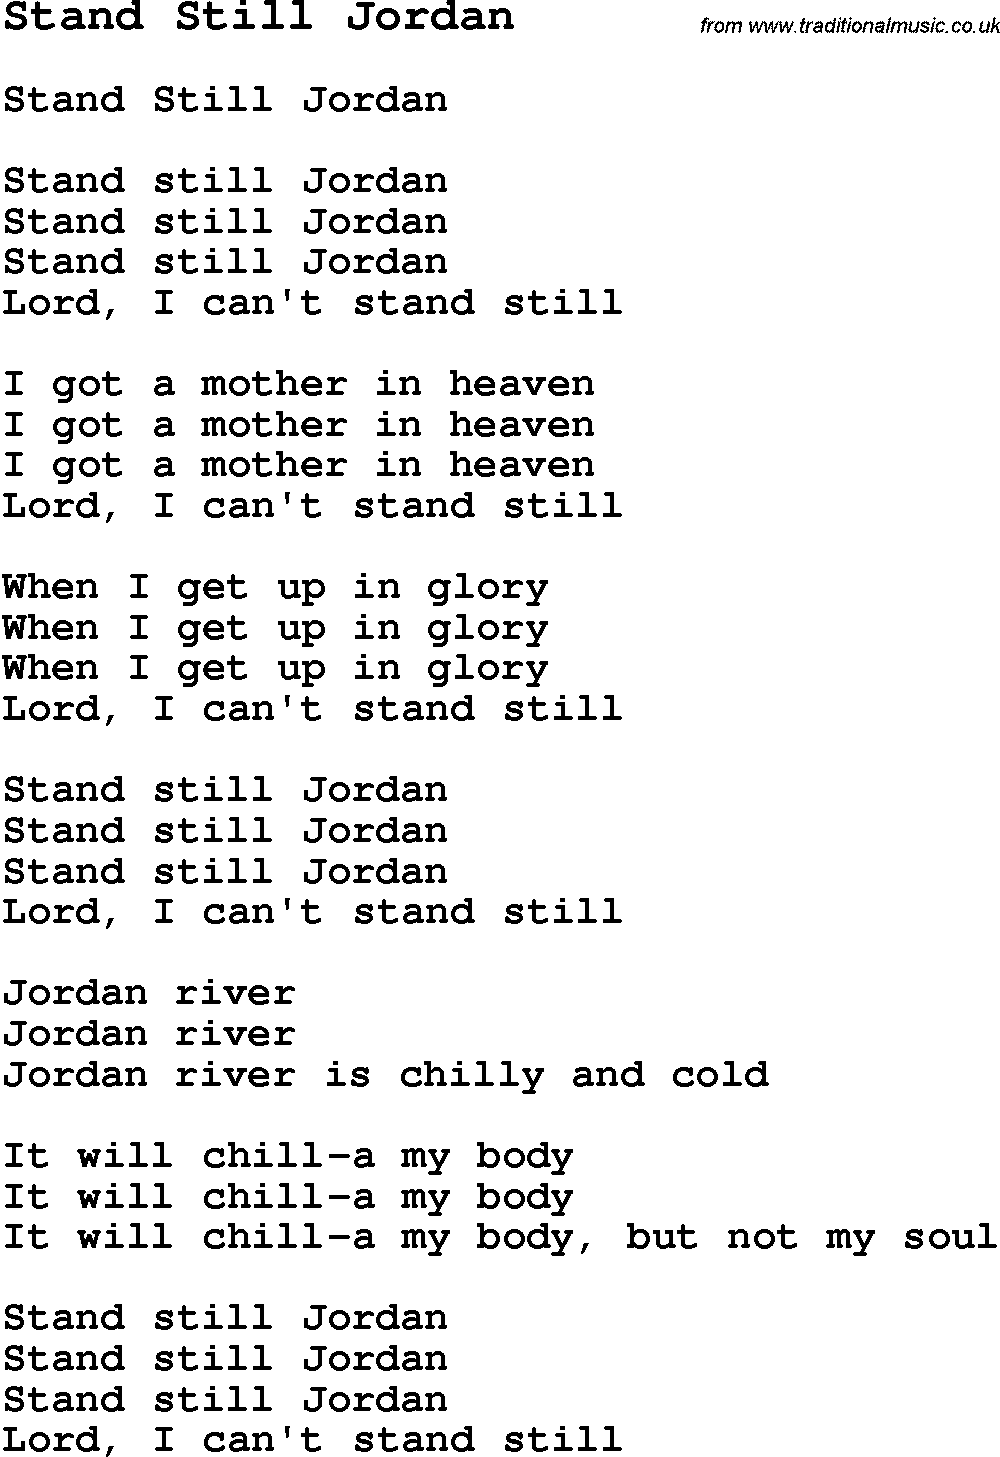 Negro Spiritual Song Lyrics for Stand Still Jordan